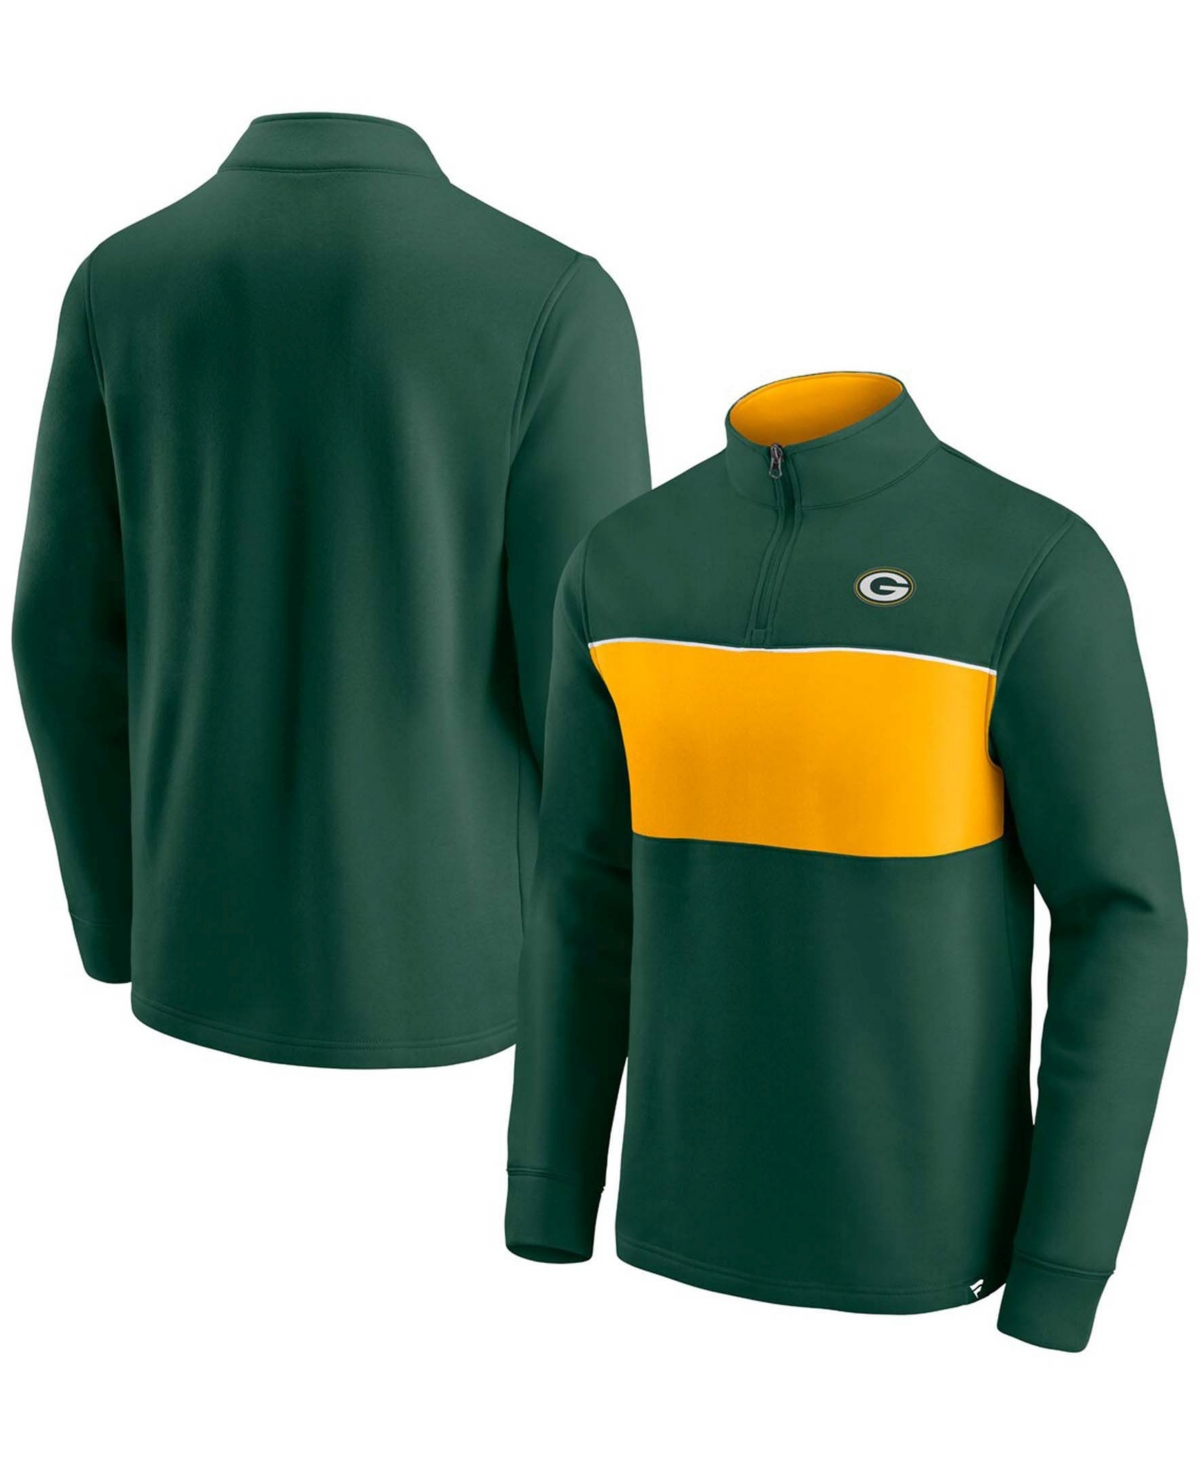 Fanatics Men's Green And Gold-tone Green Bay Packers Block Party Quarter-zip Jacket In Green,gold-tone